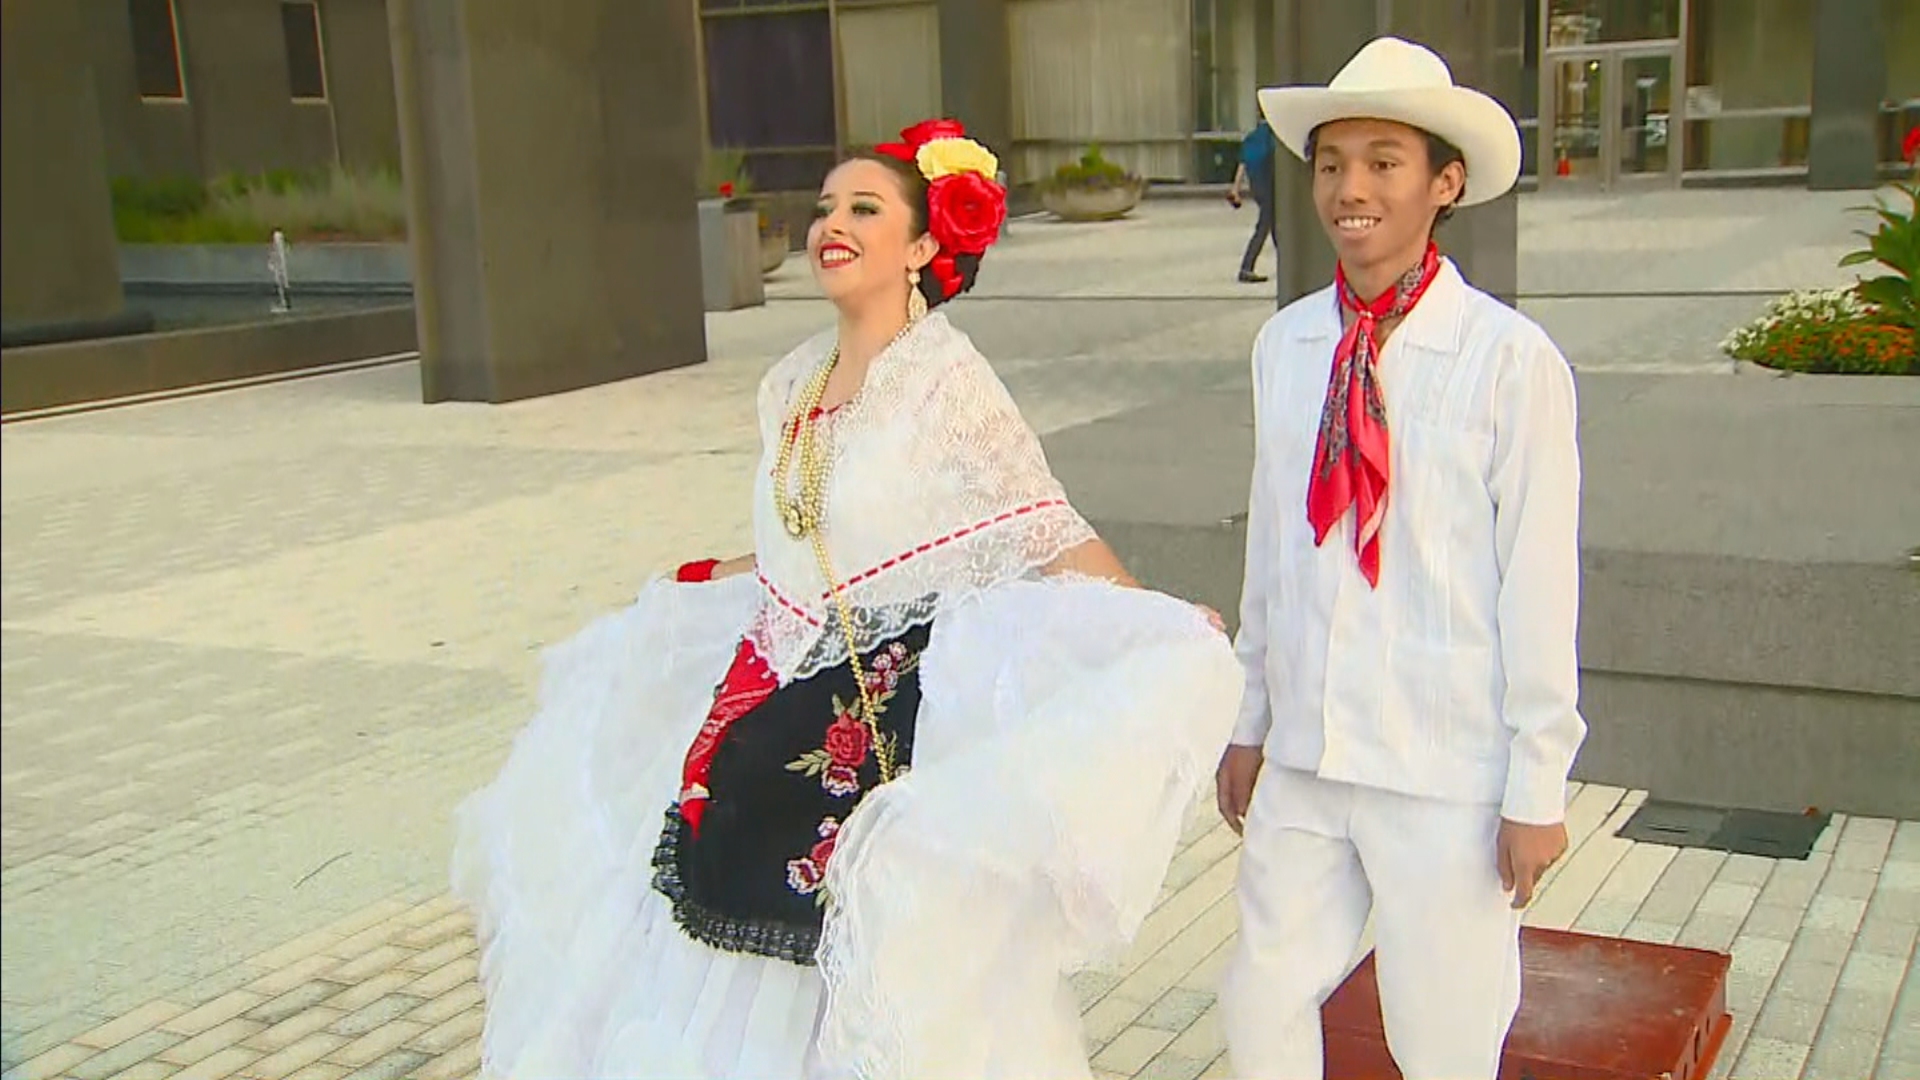 Hispanic, Latino Heritage spotlighted in annual Fiesta Indianapolis celebration